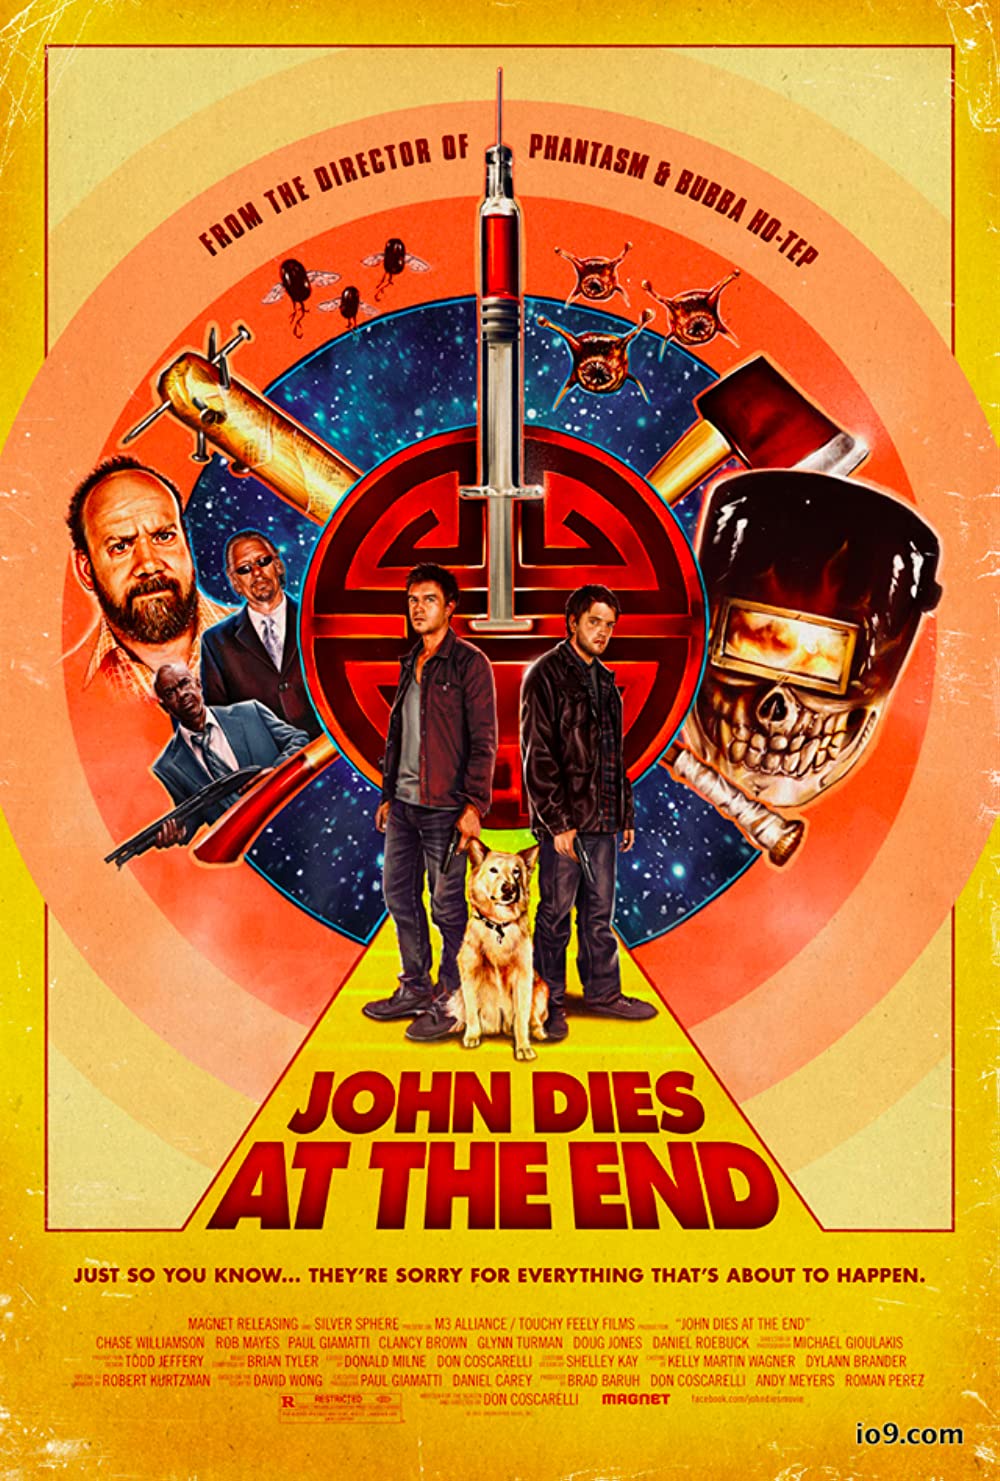 Filmbeschreibung zu John Dies at the End